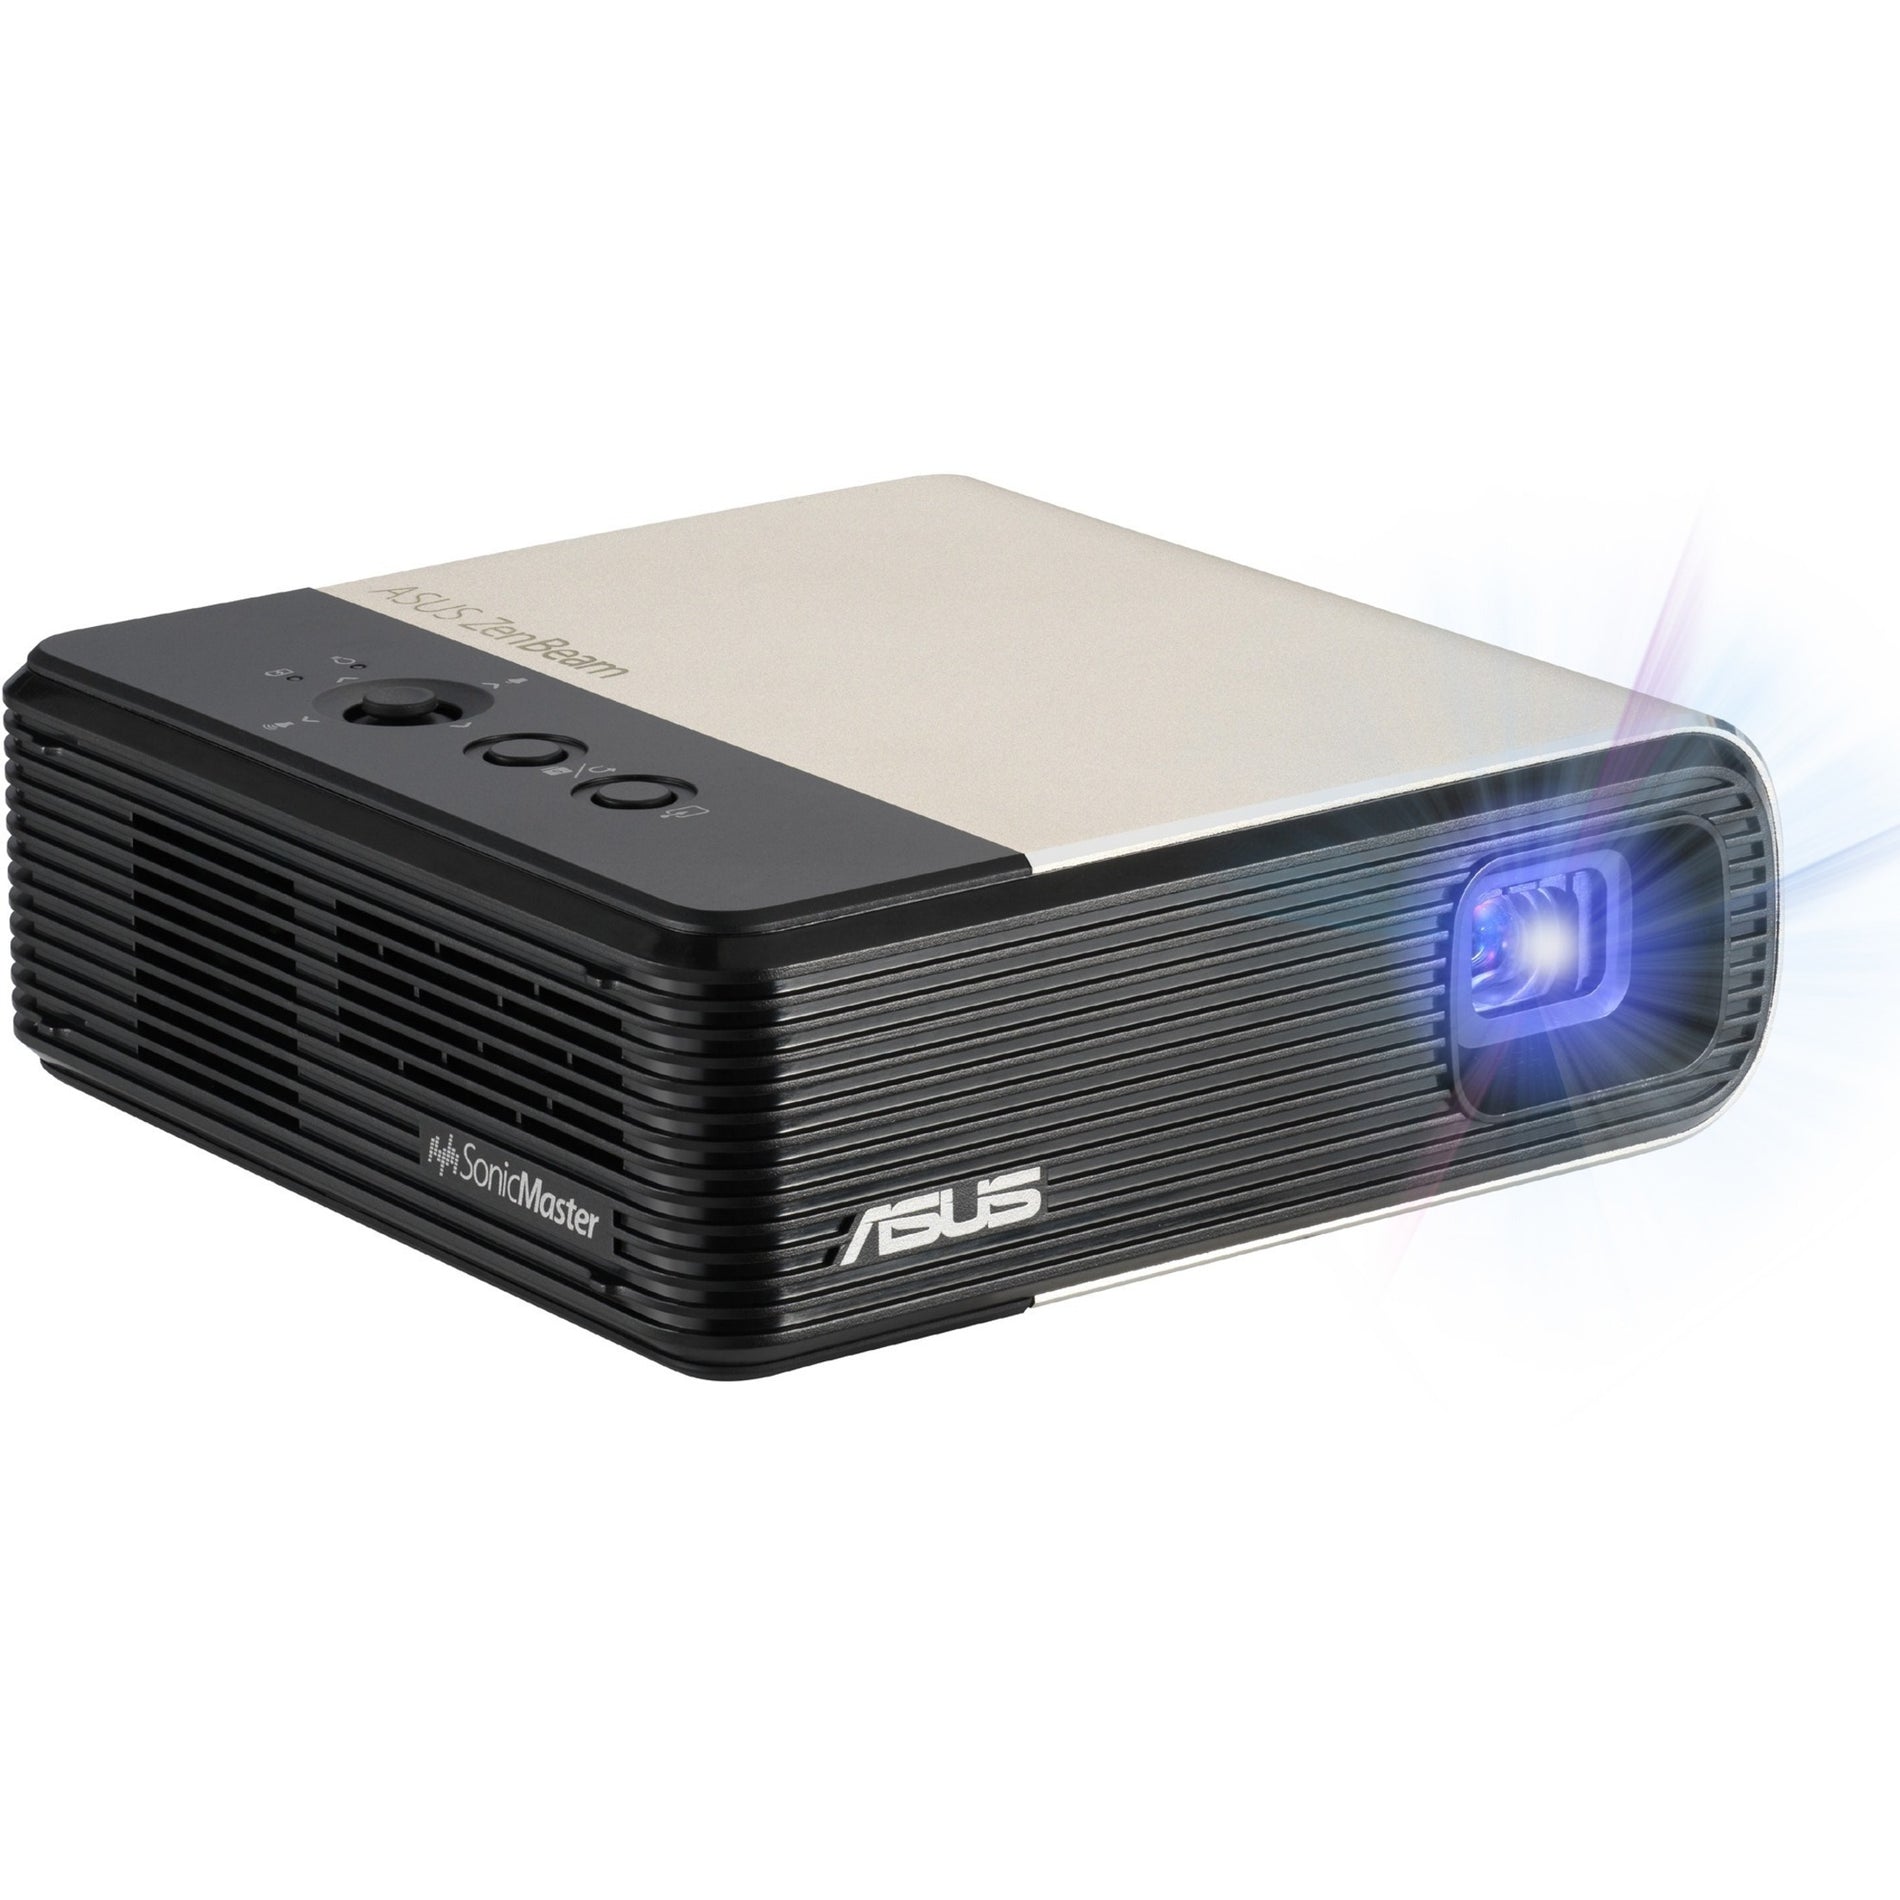 Asus ASUS ZENBEAM E2 DLP Projector, Ceiling Mountable, Portable - Black, Gold